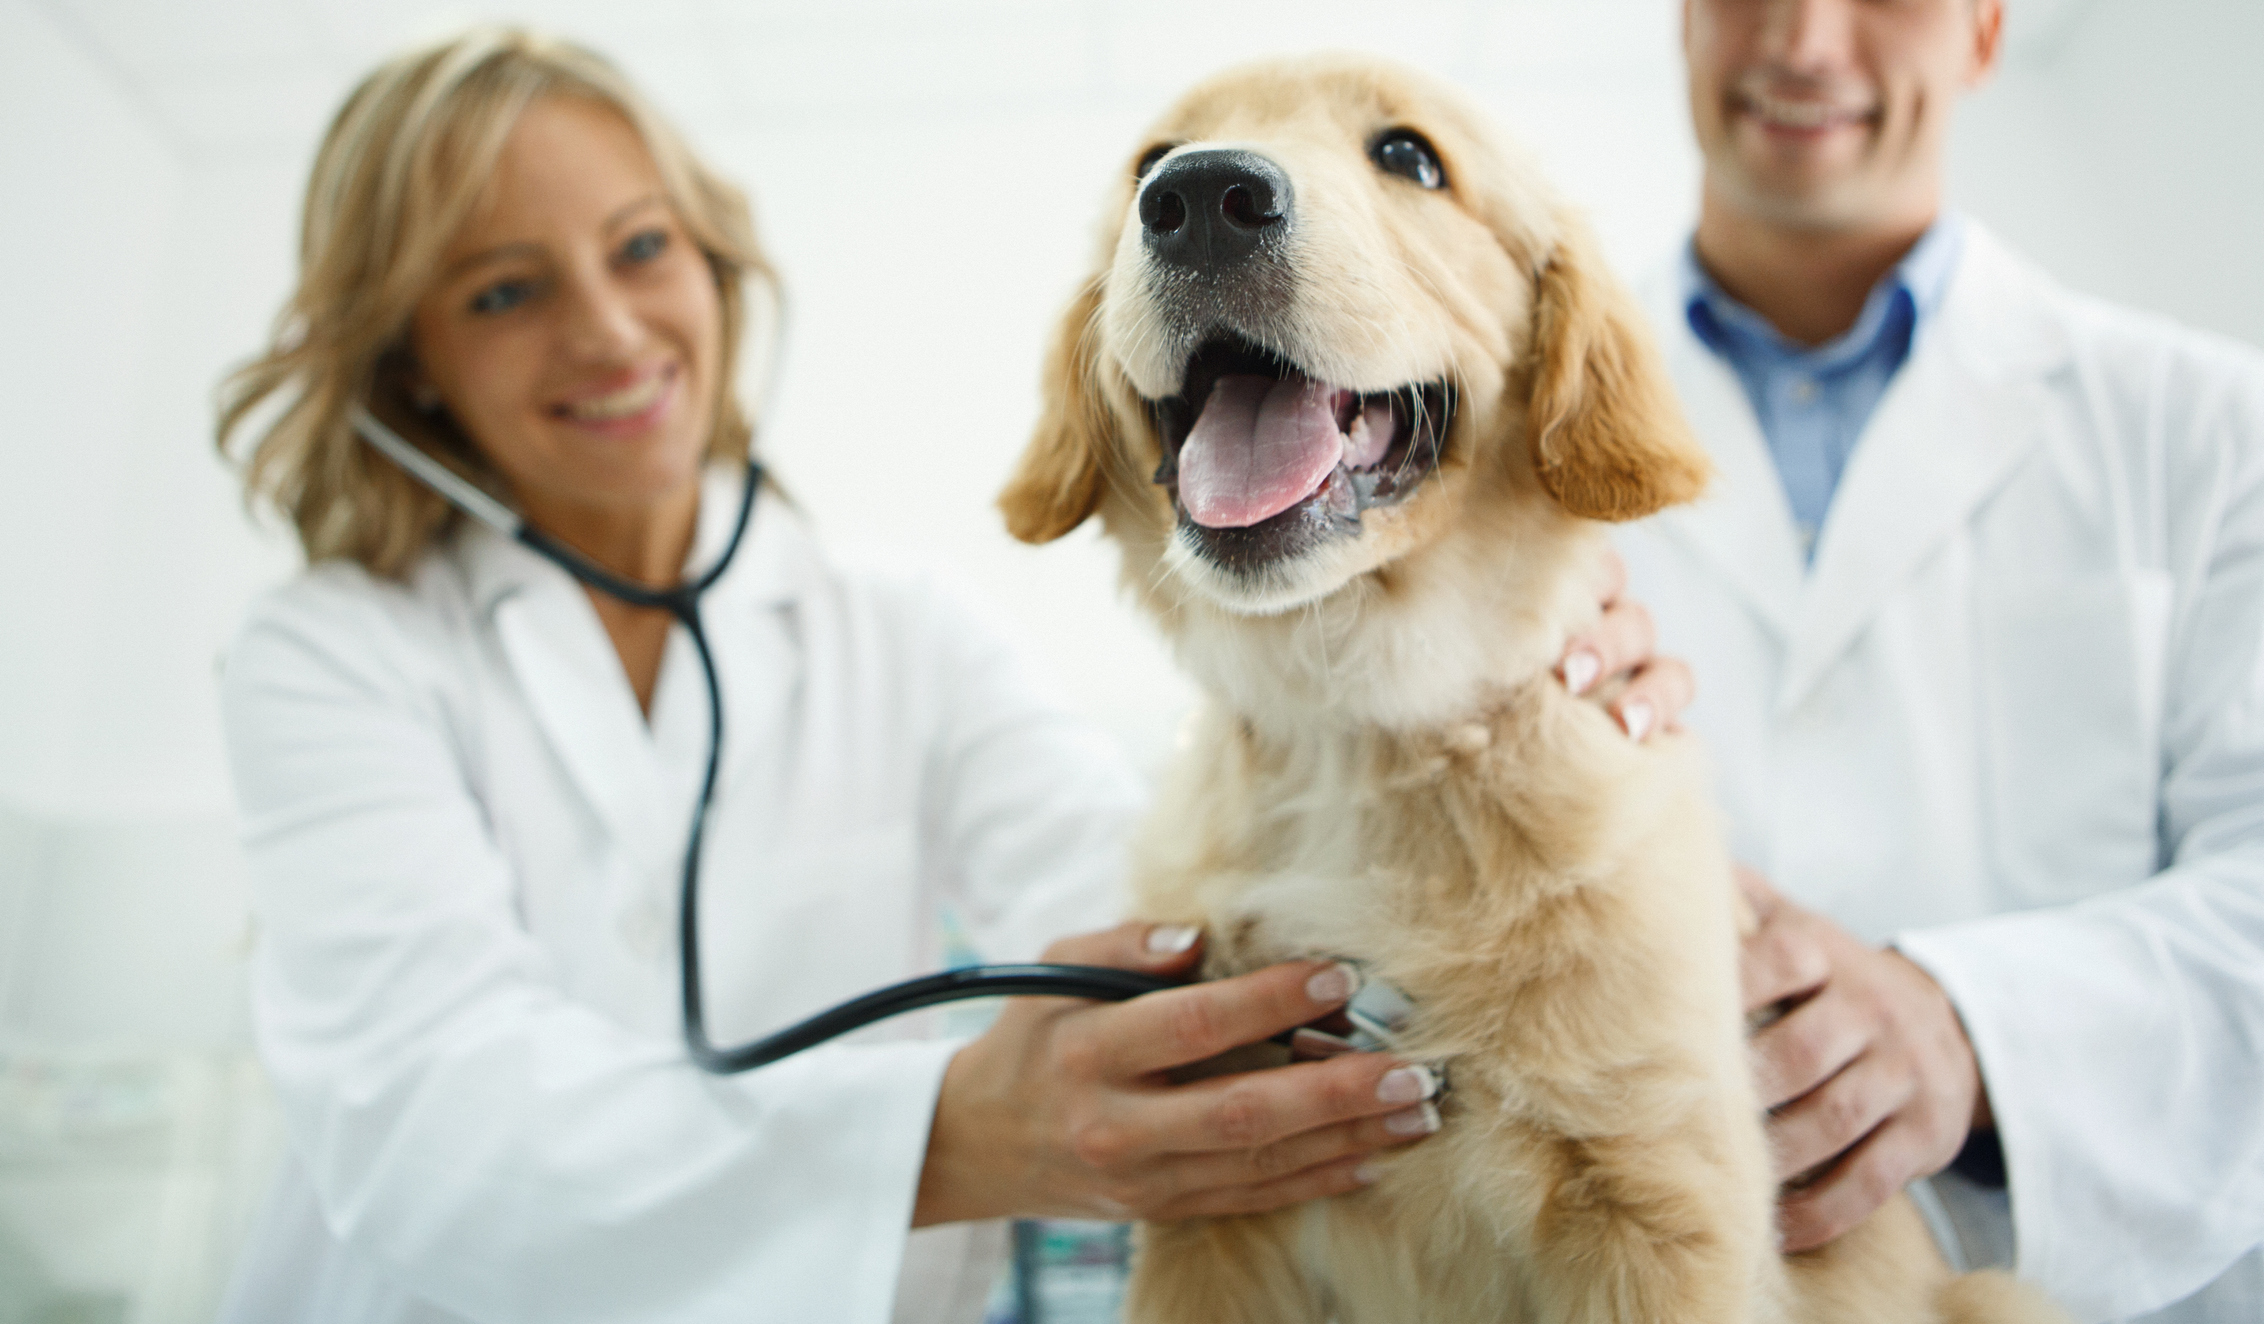 Vétérinaires examinant un chien.